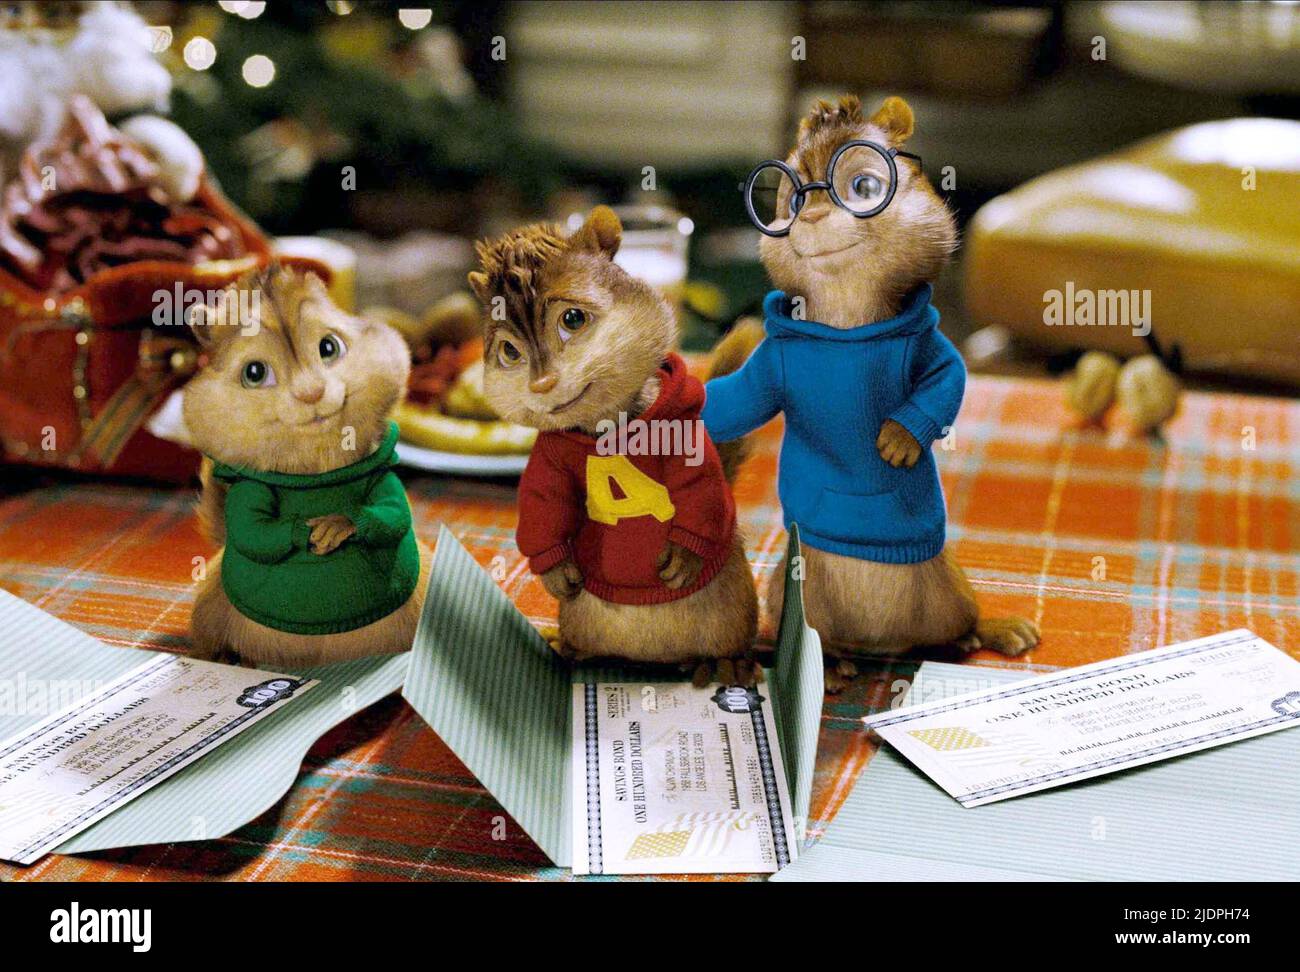 Alvin et les chipmunks hi-res stock photography and images - Alamy